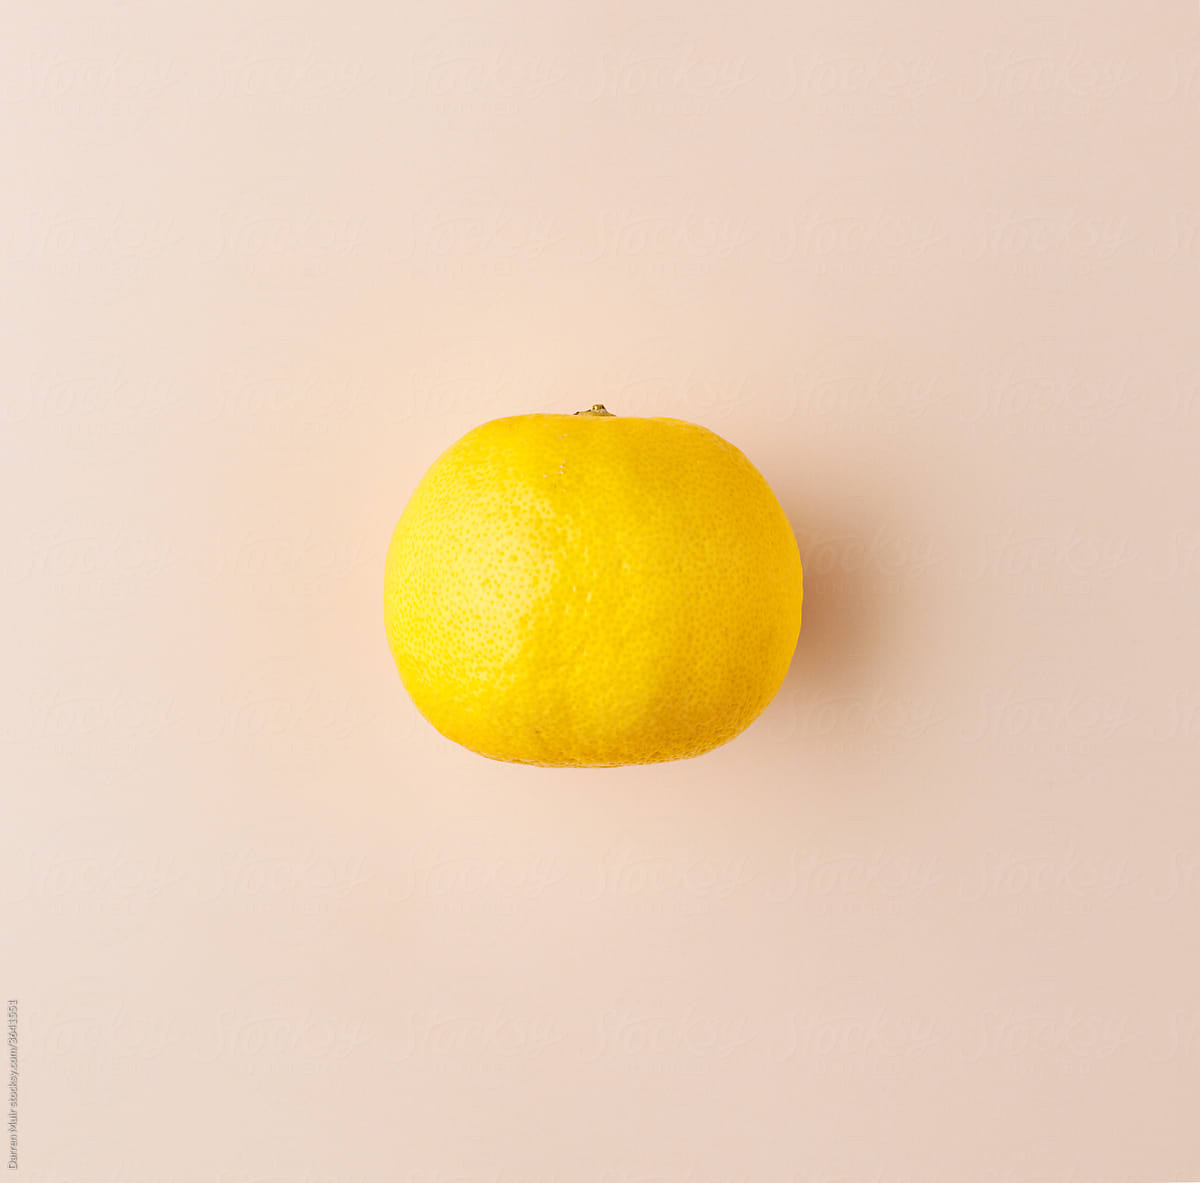 Round Lemon